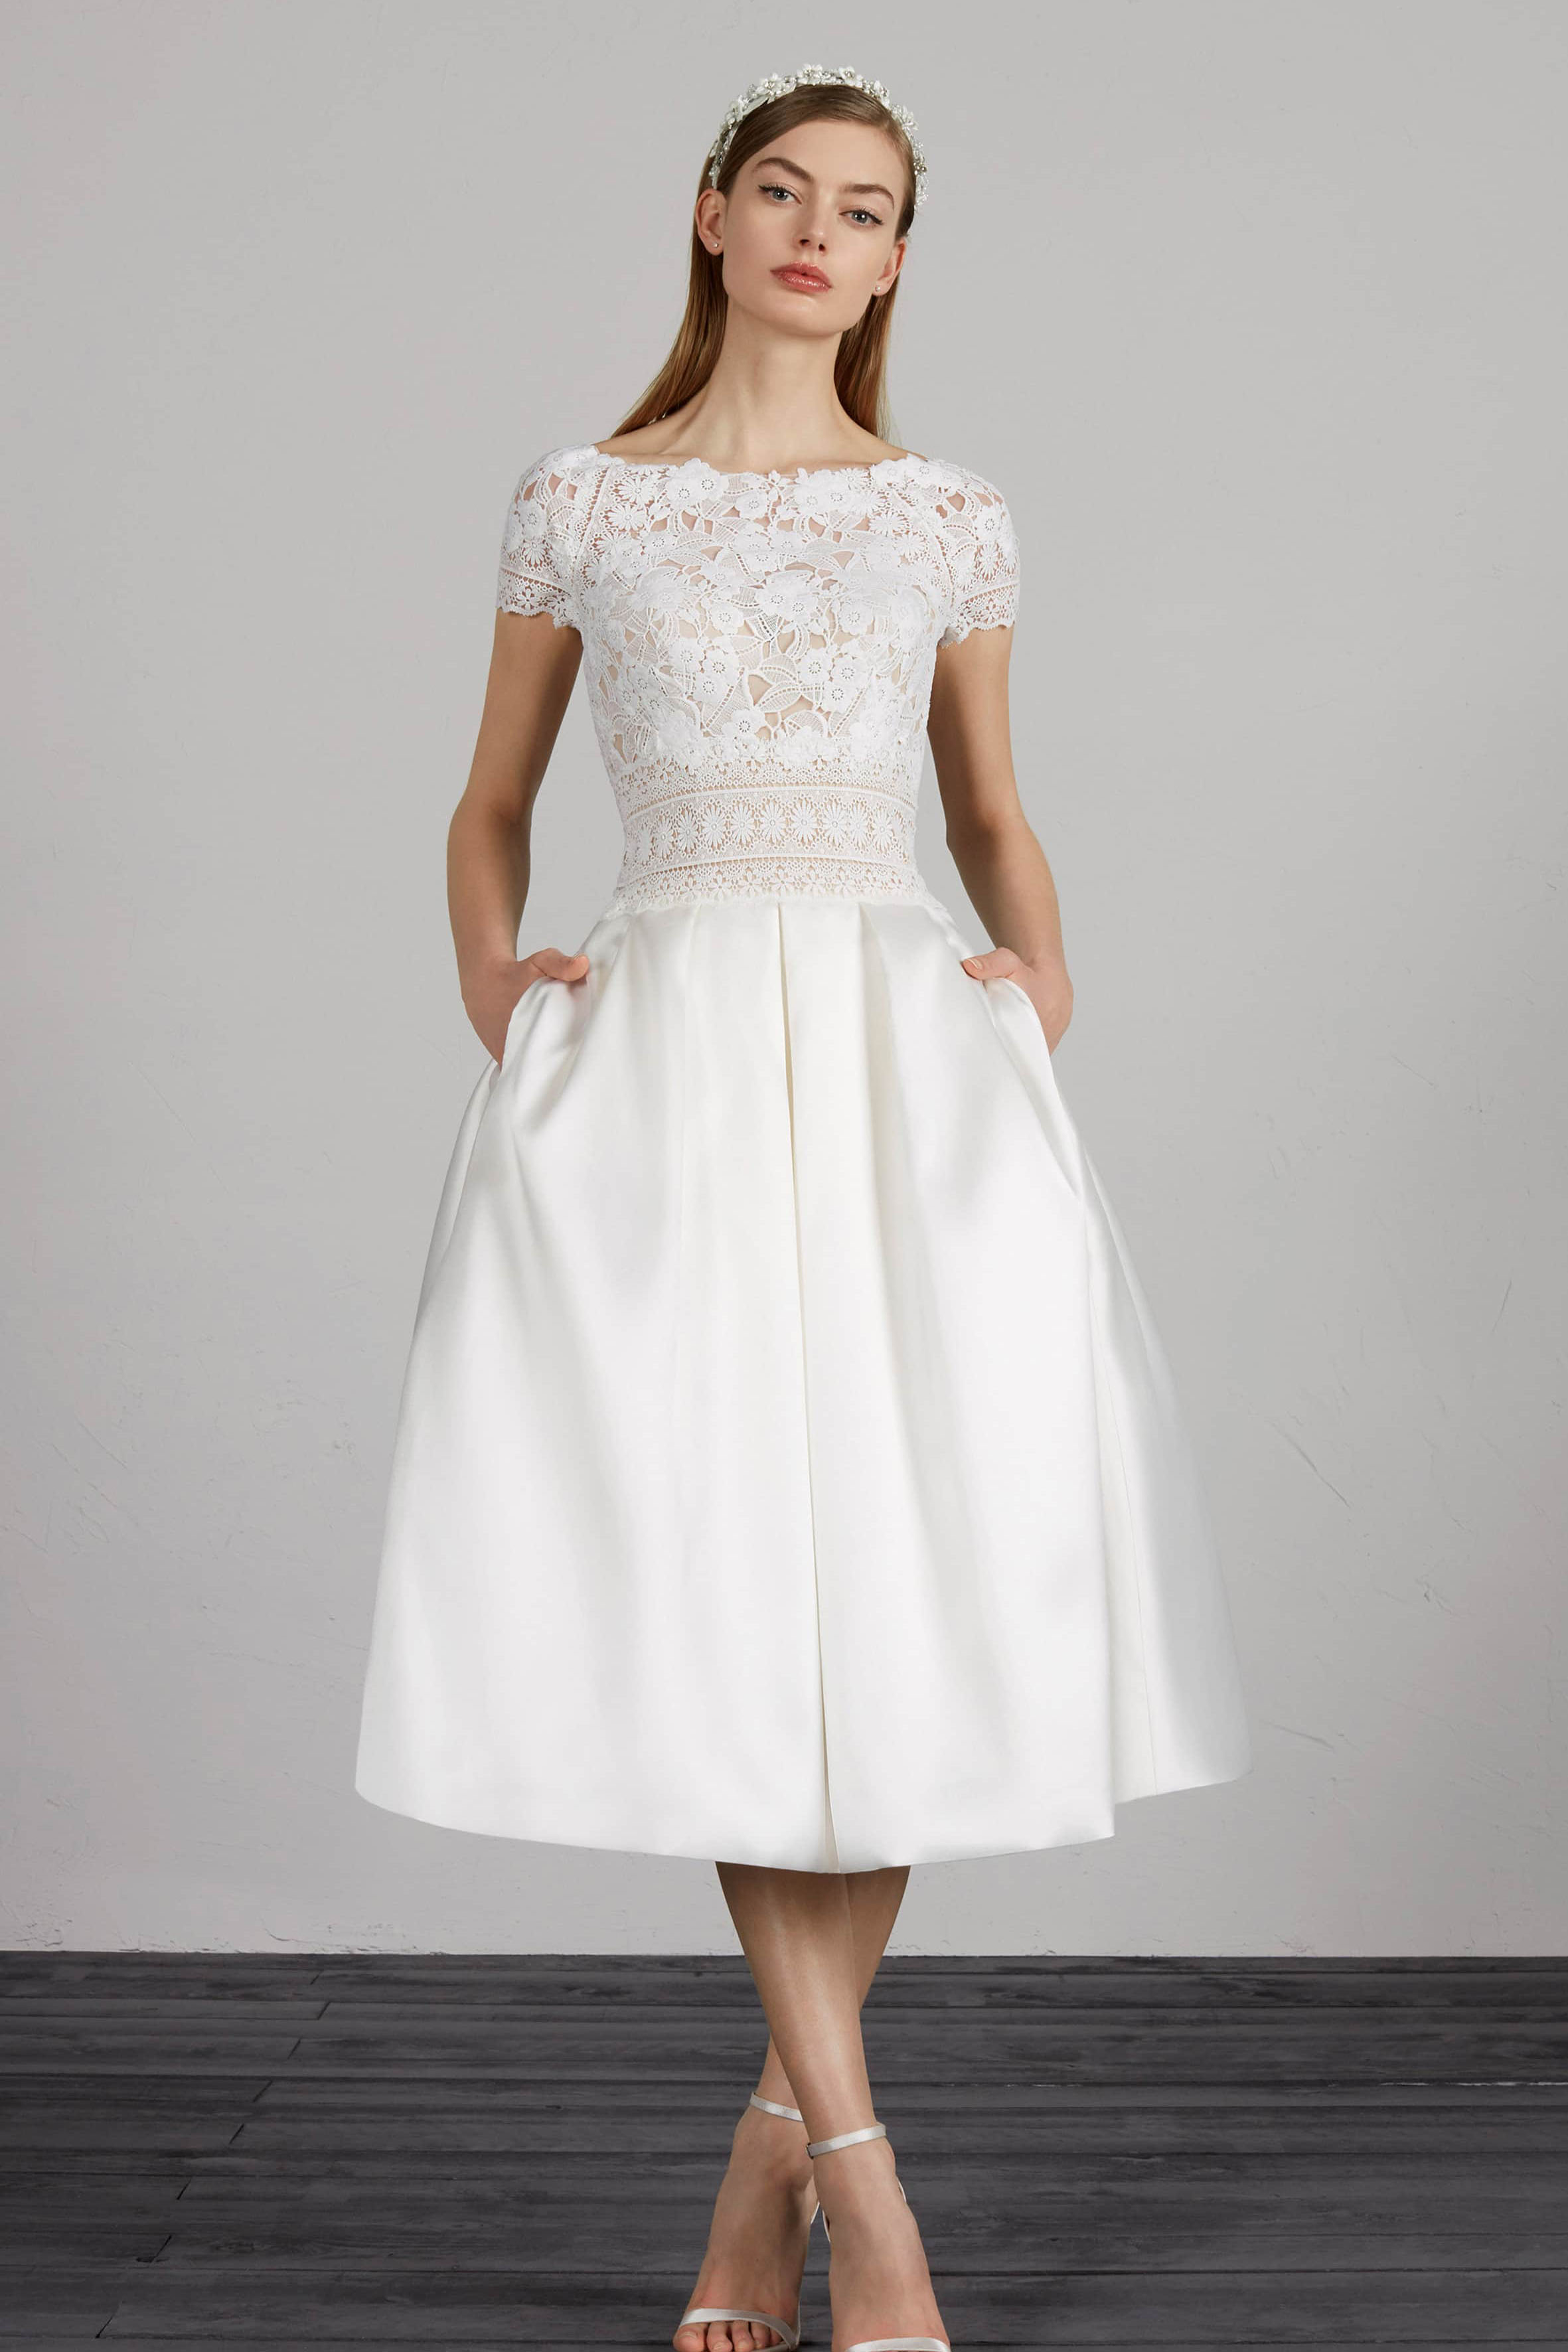 A knee length wedding dress with pockets